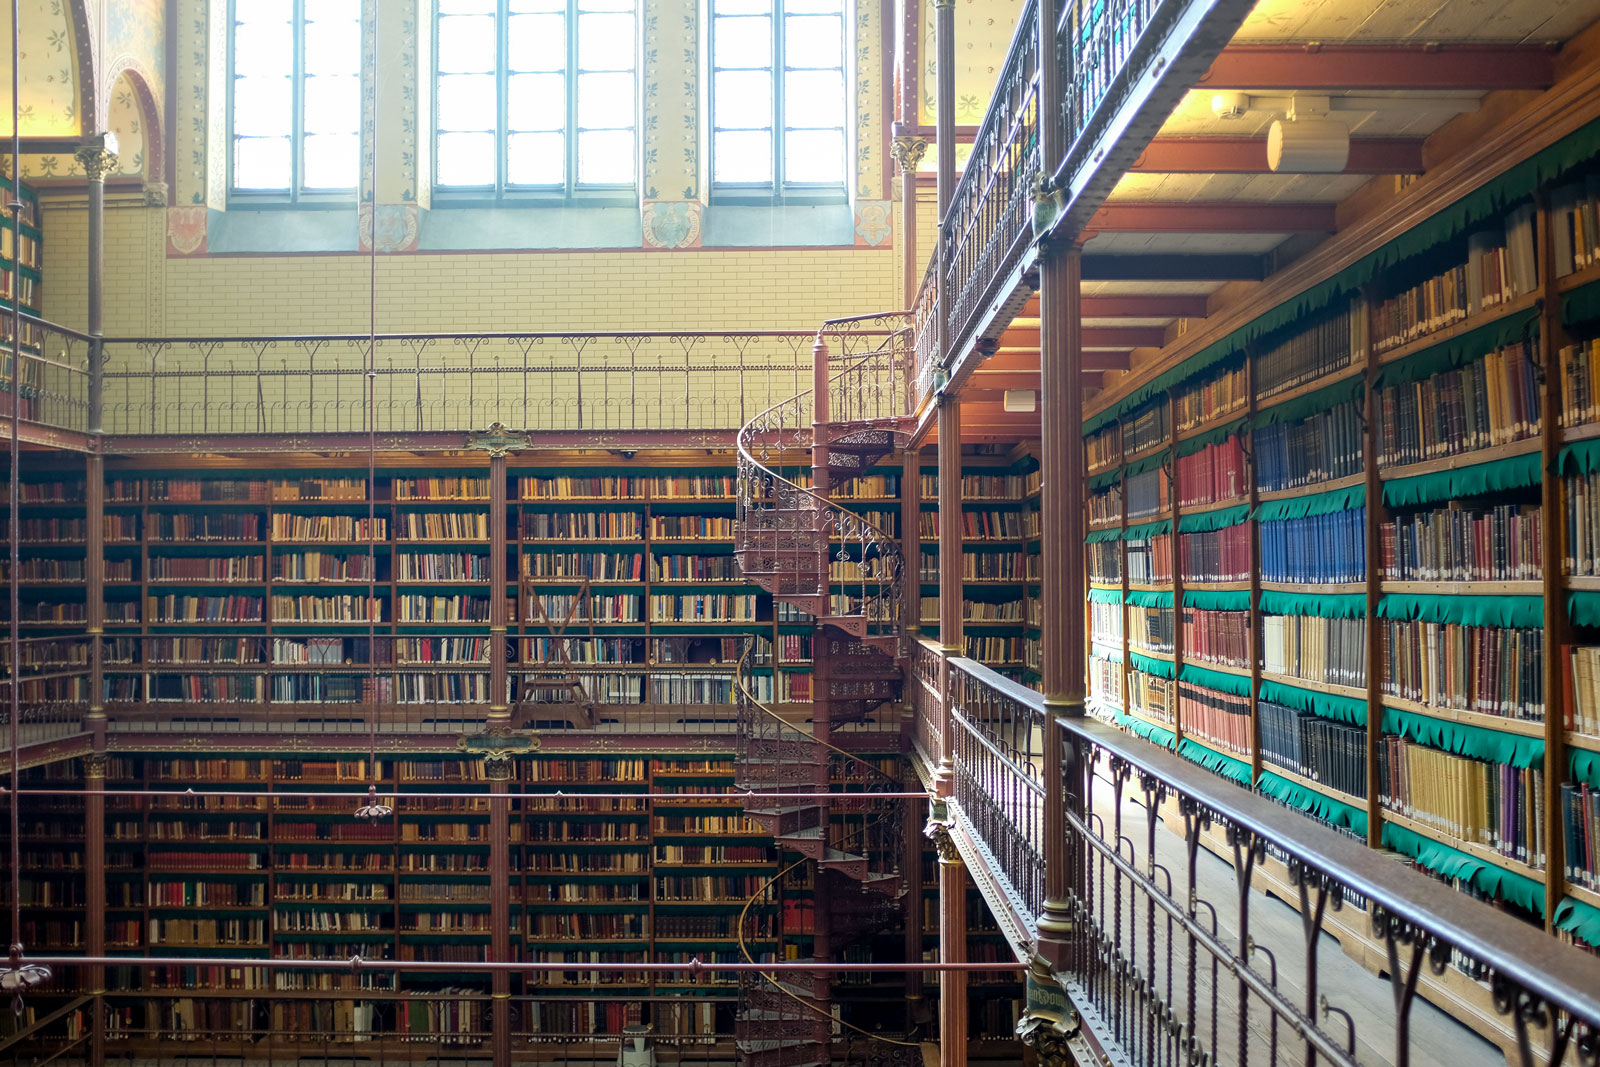 Inside the Rijksmuseum Library